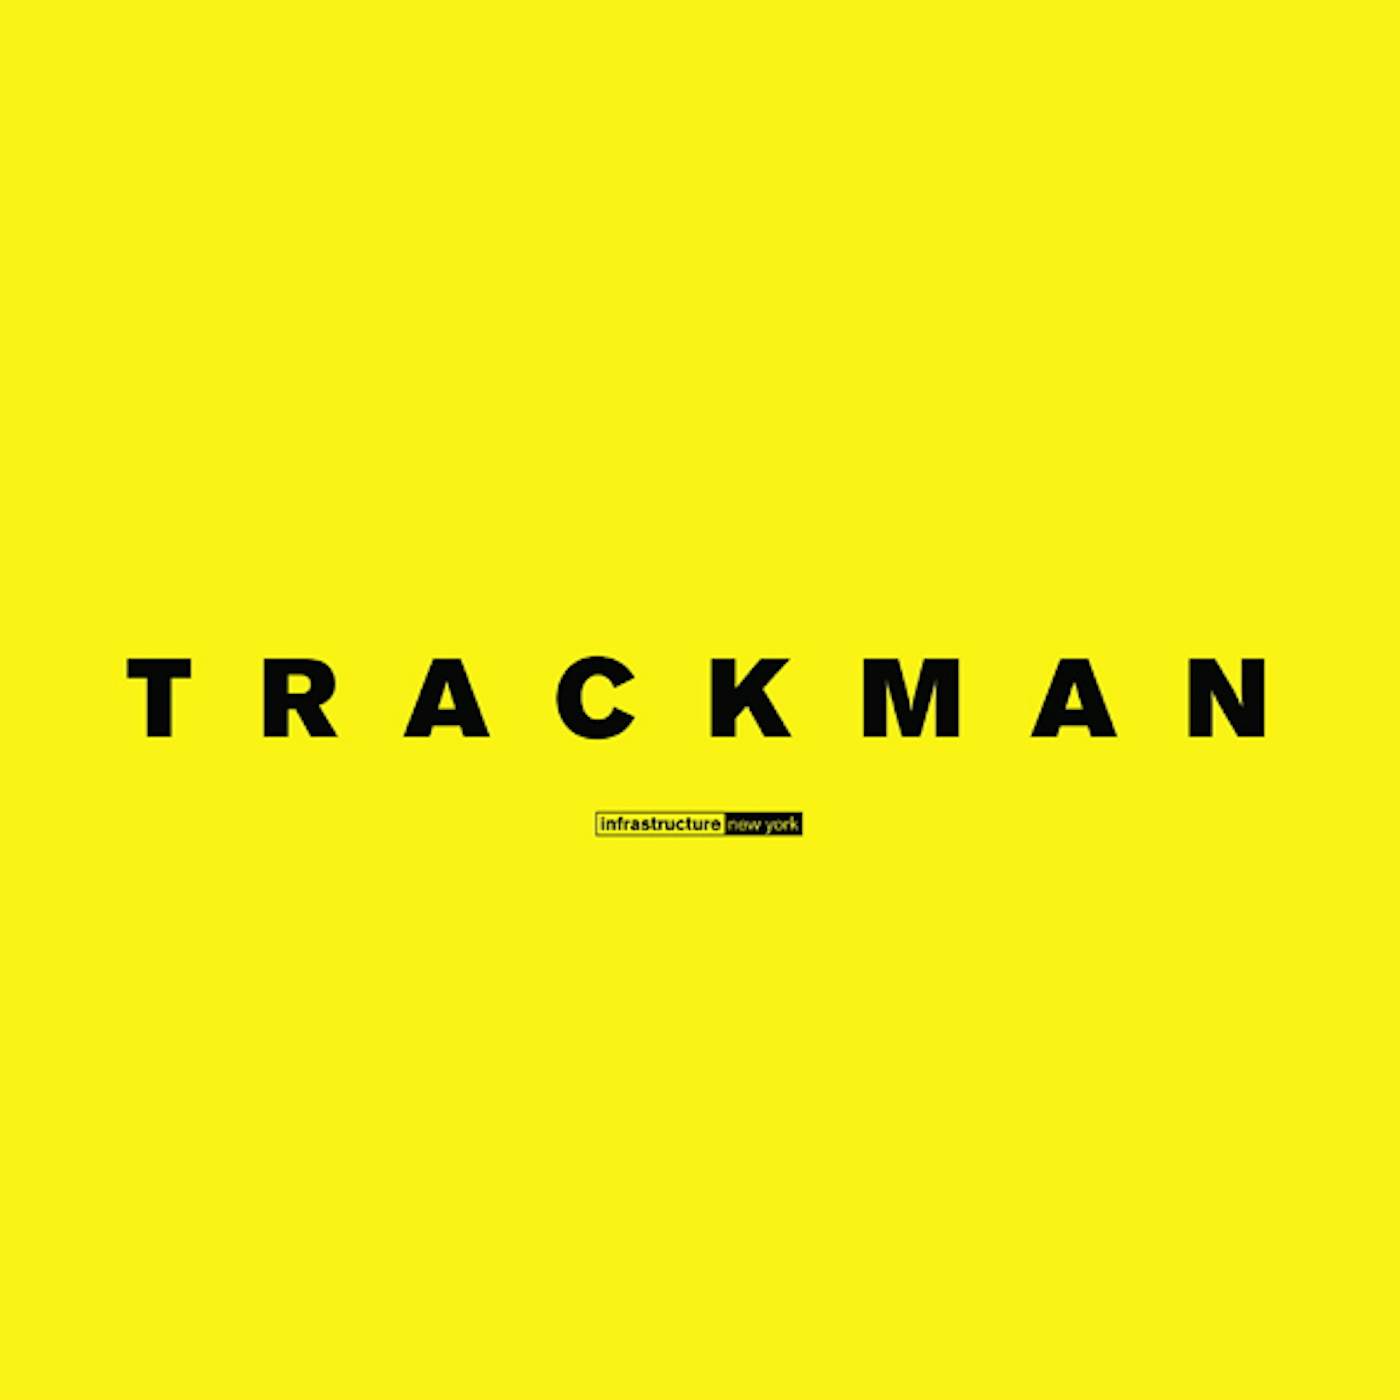 Trackman Vinyl Record